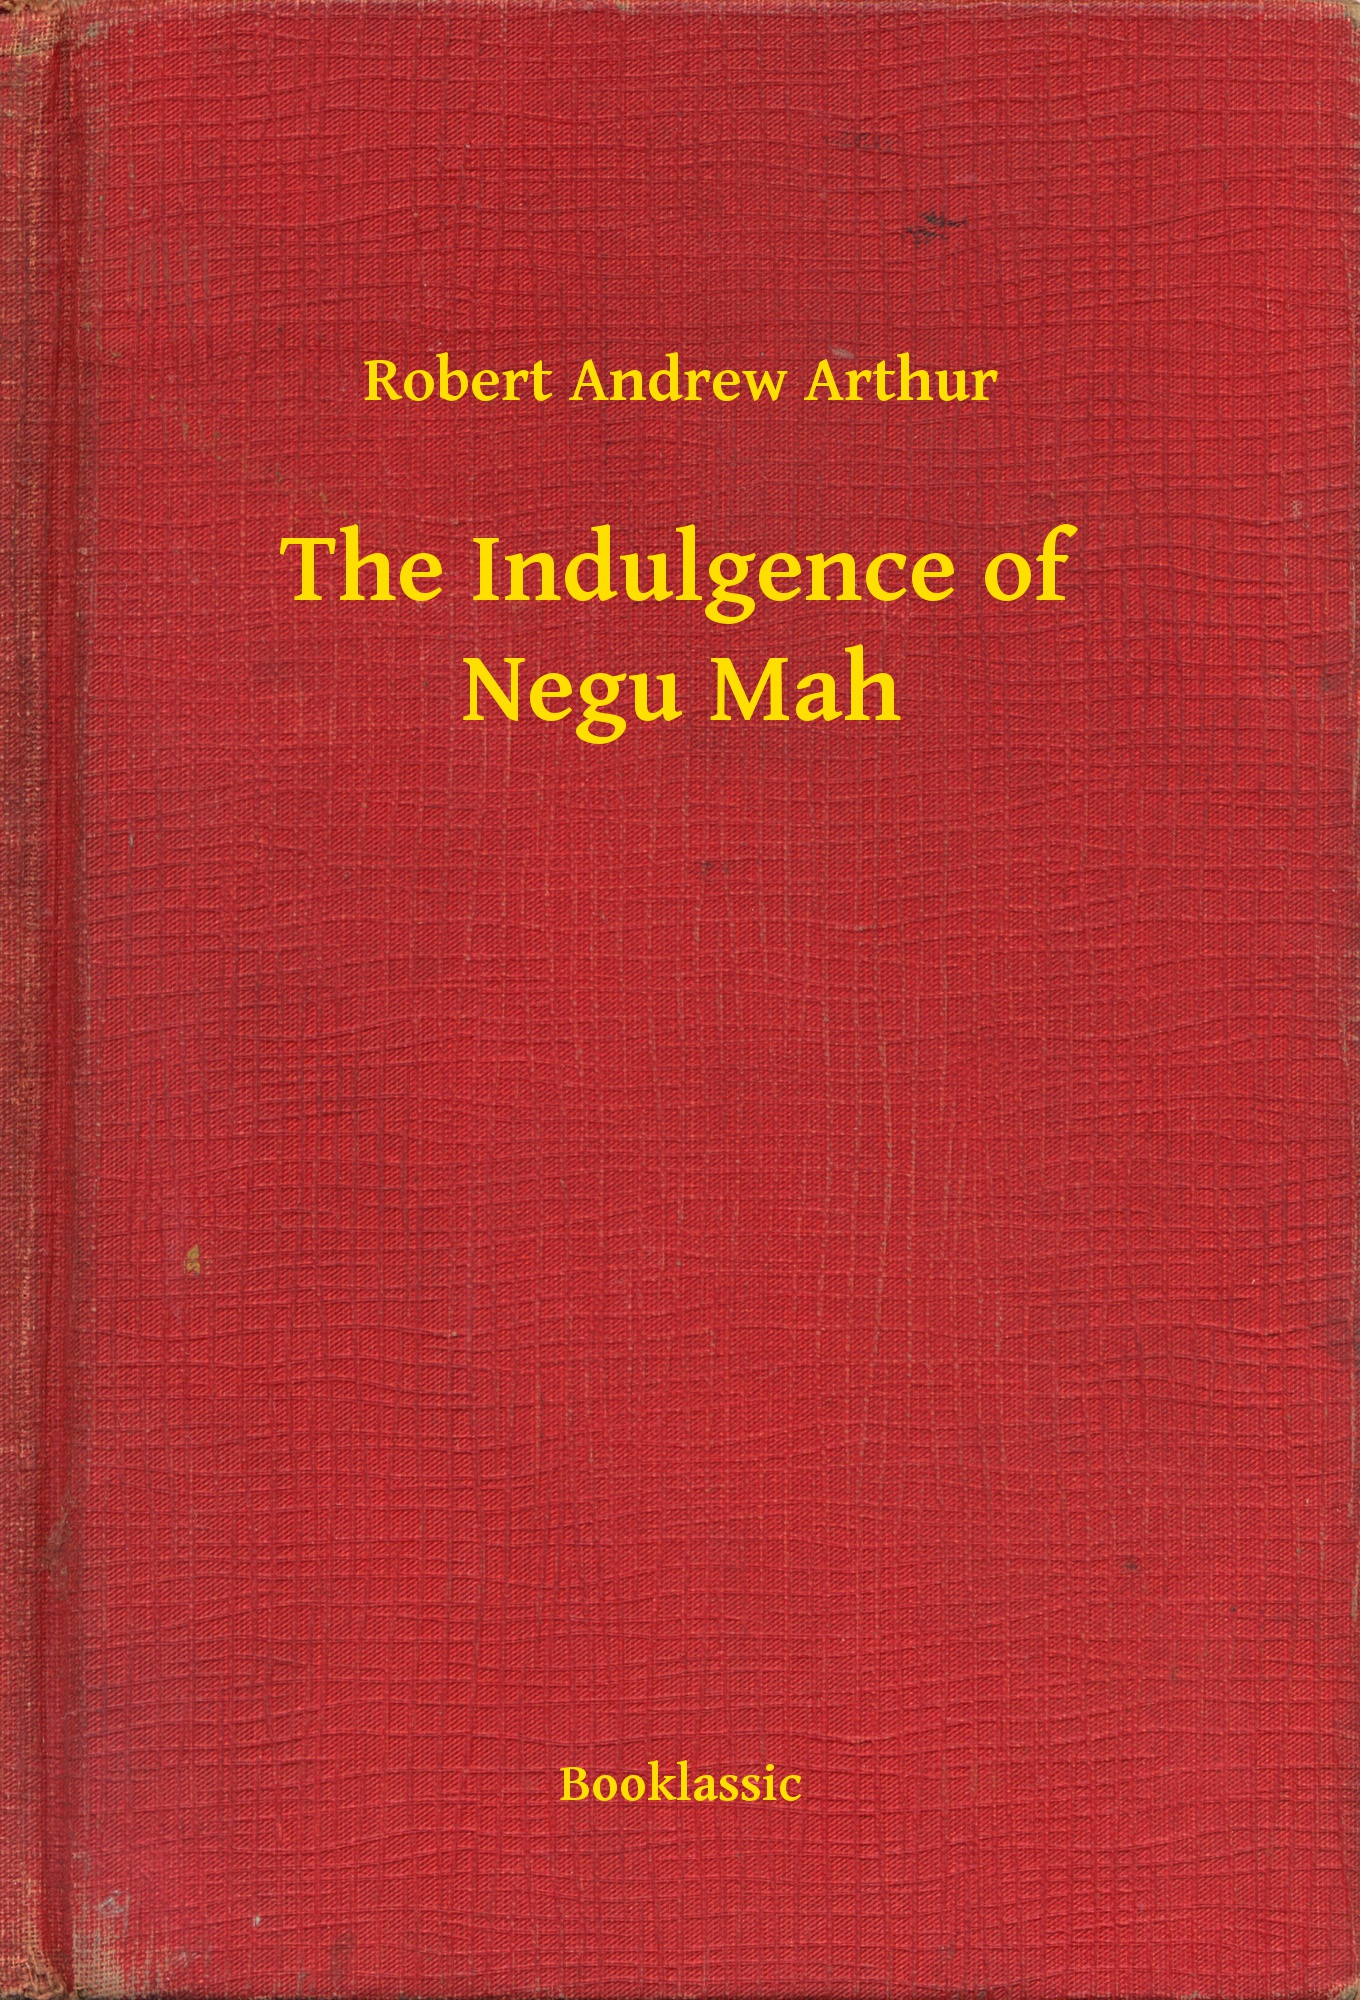 The Indulgence of Negu Mah